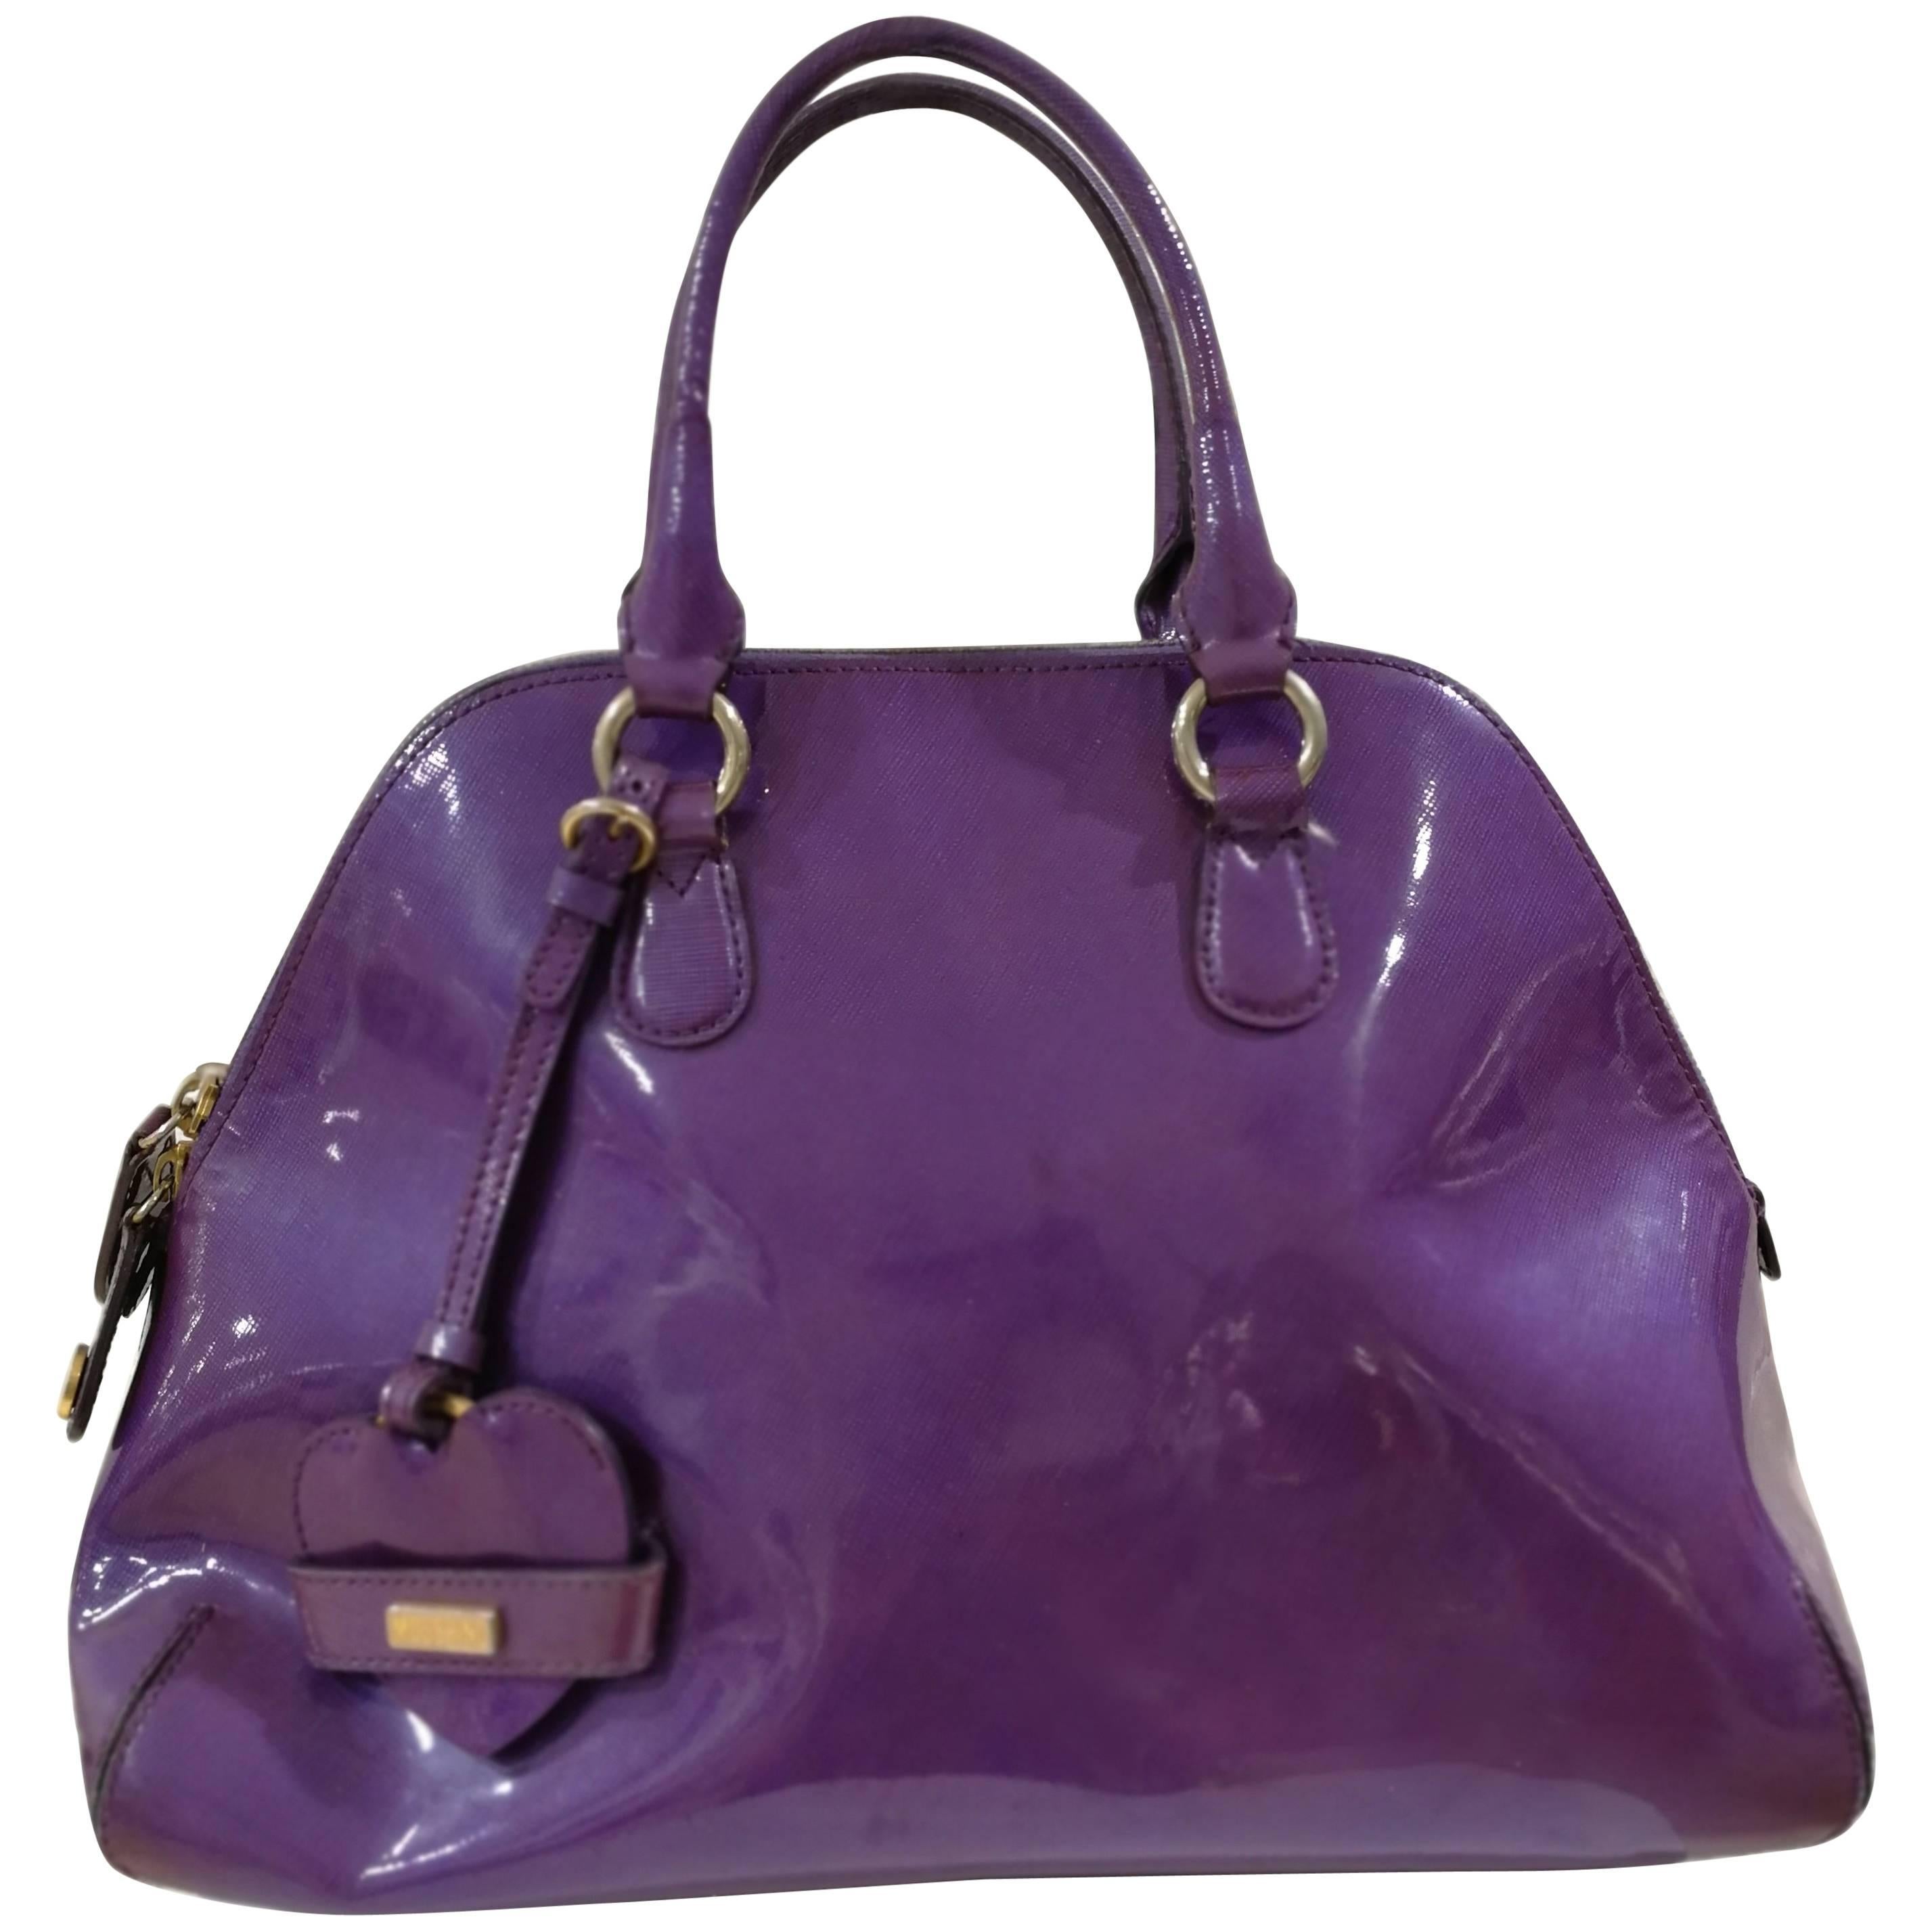 Moschino purple patent leather Bag